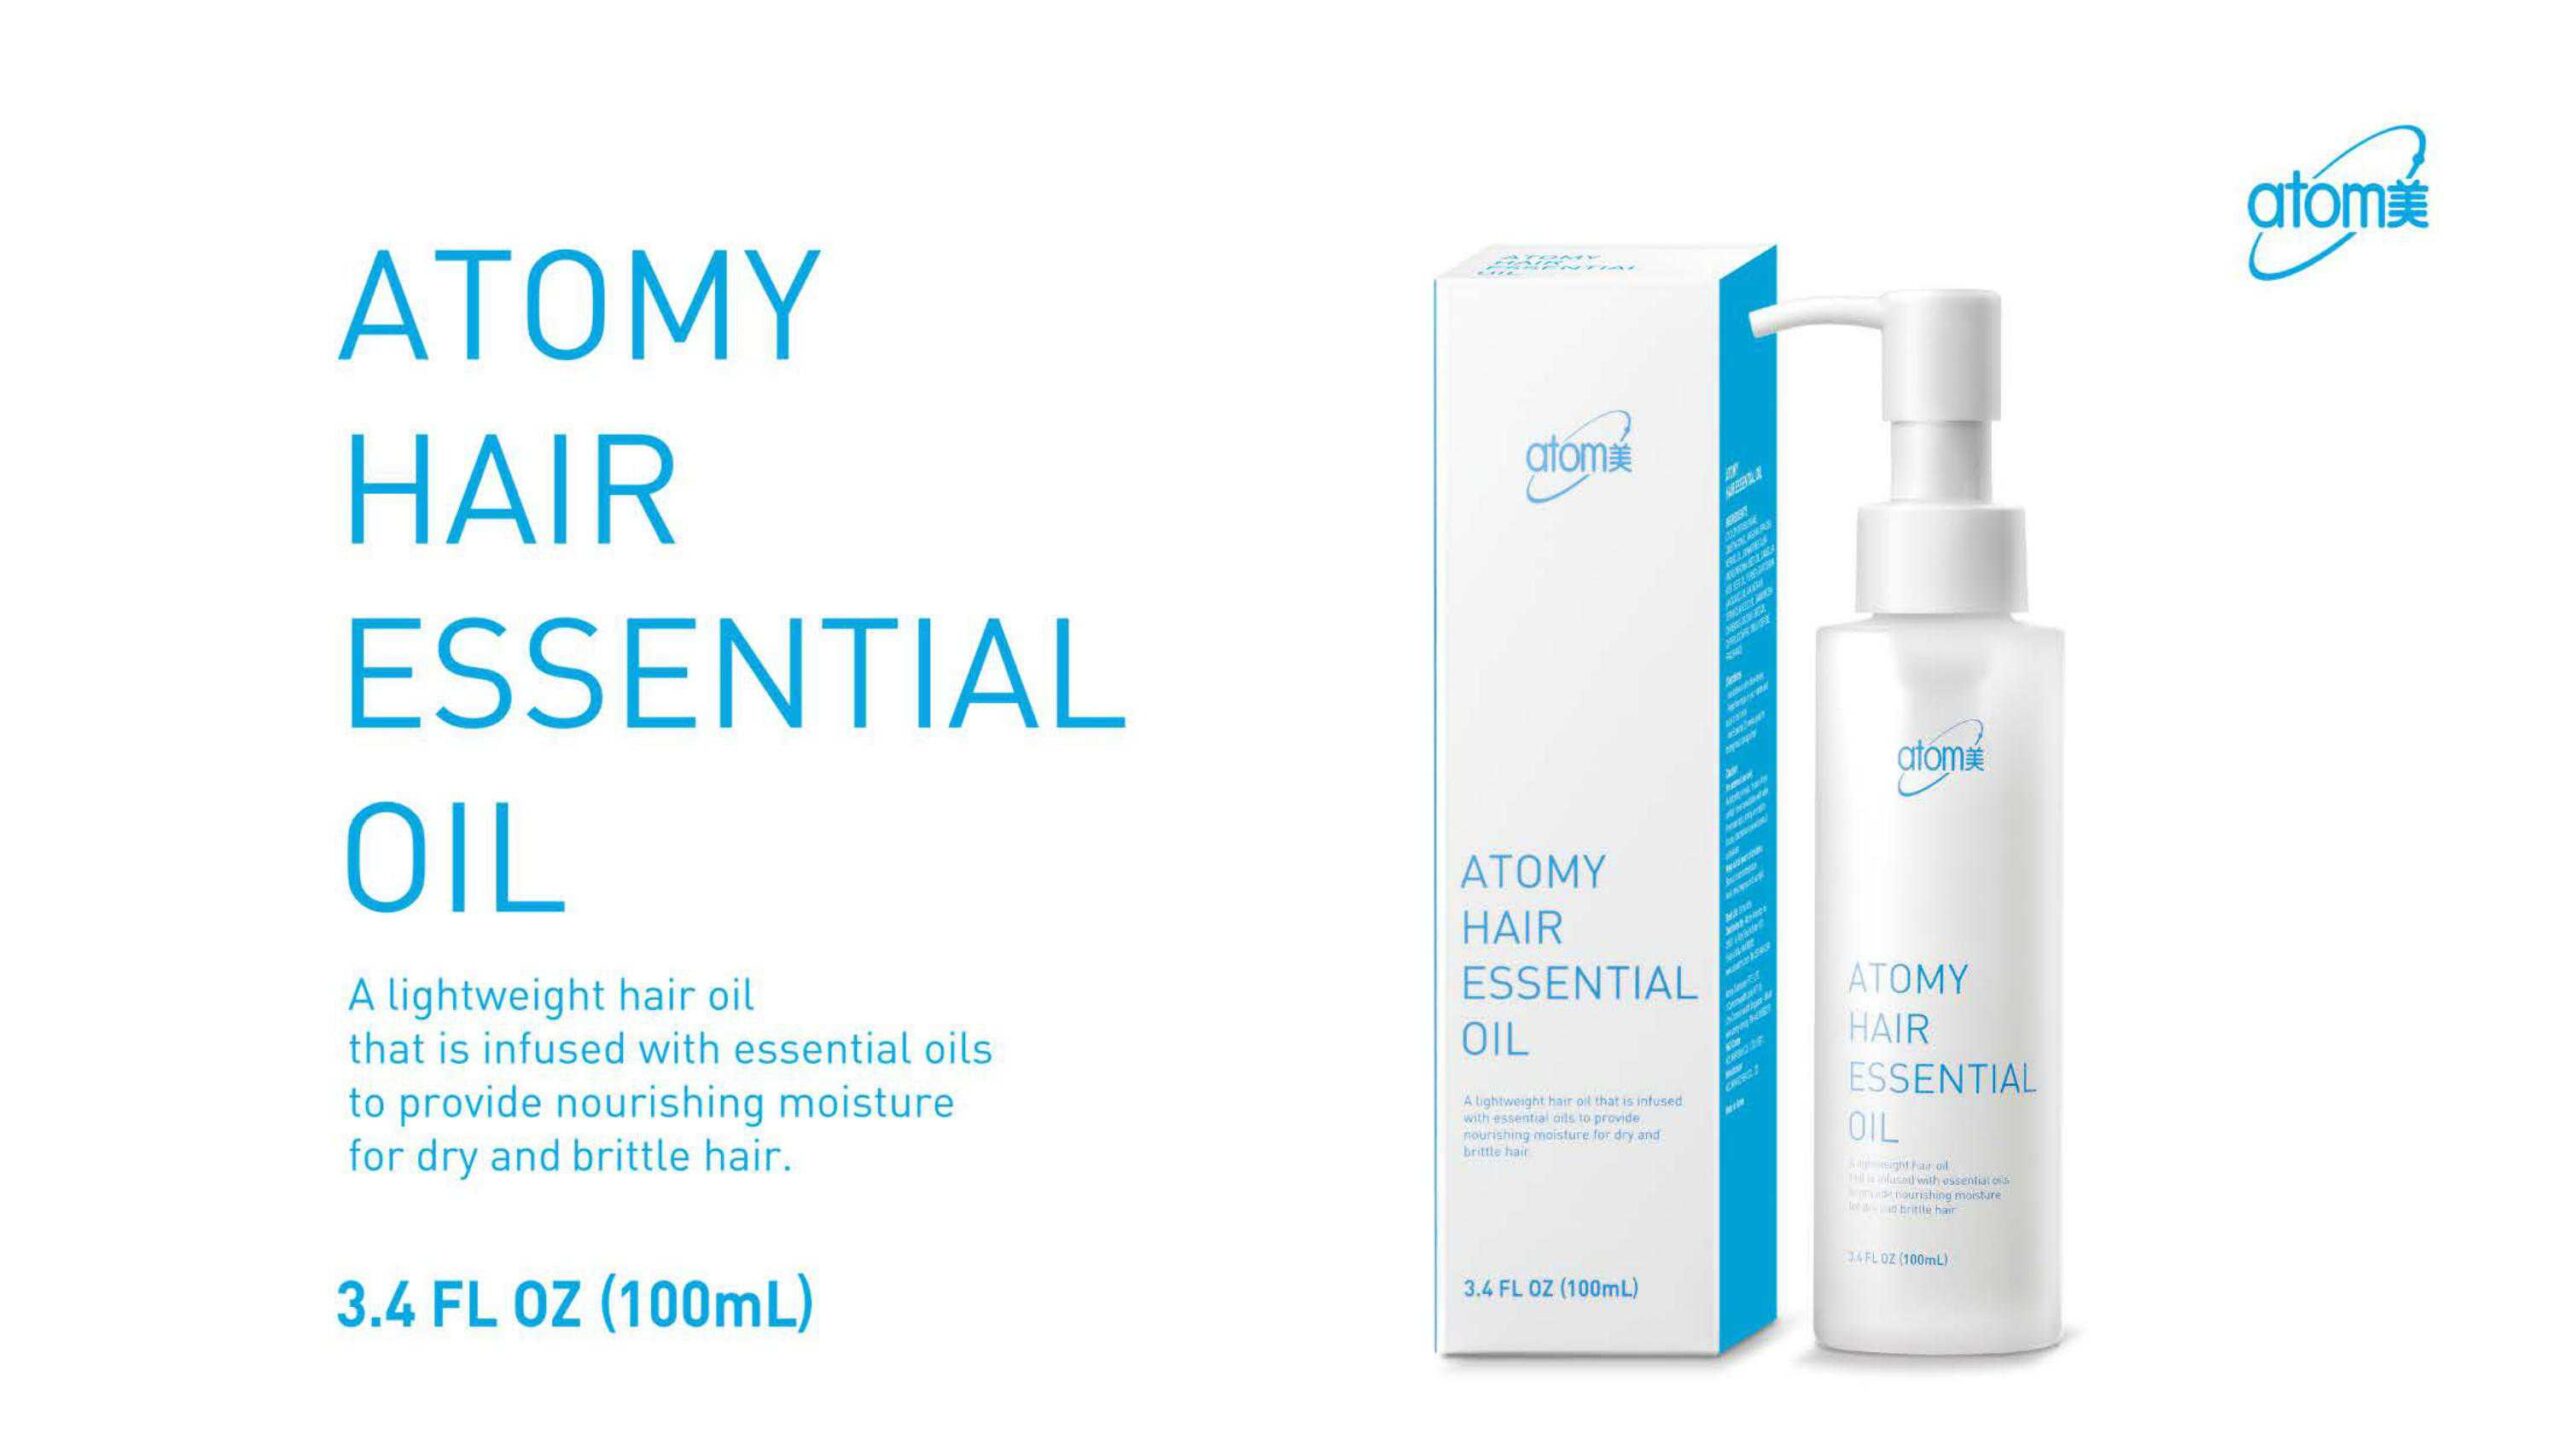 ATOMY Hair Essential Oil